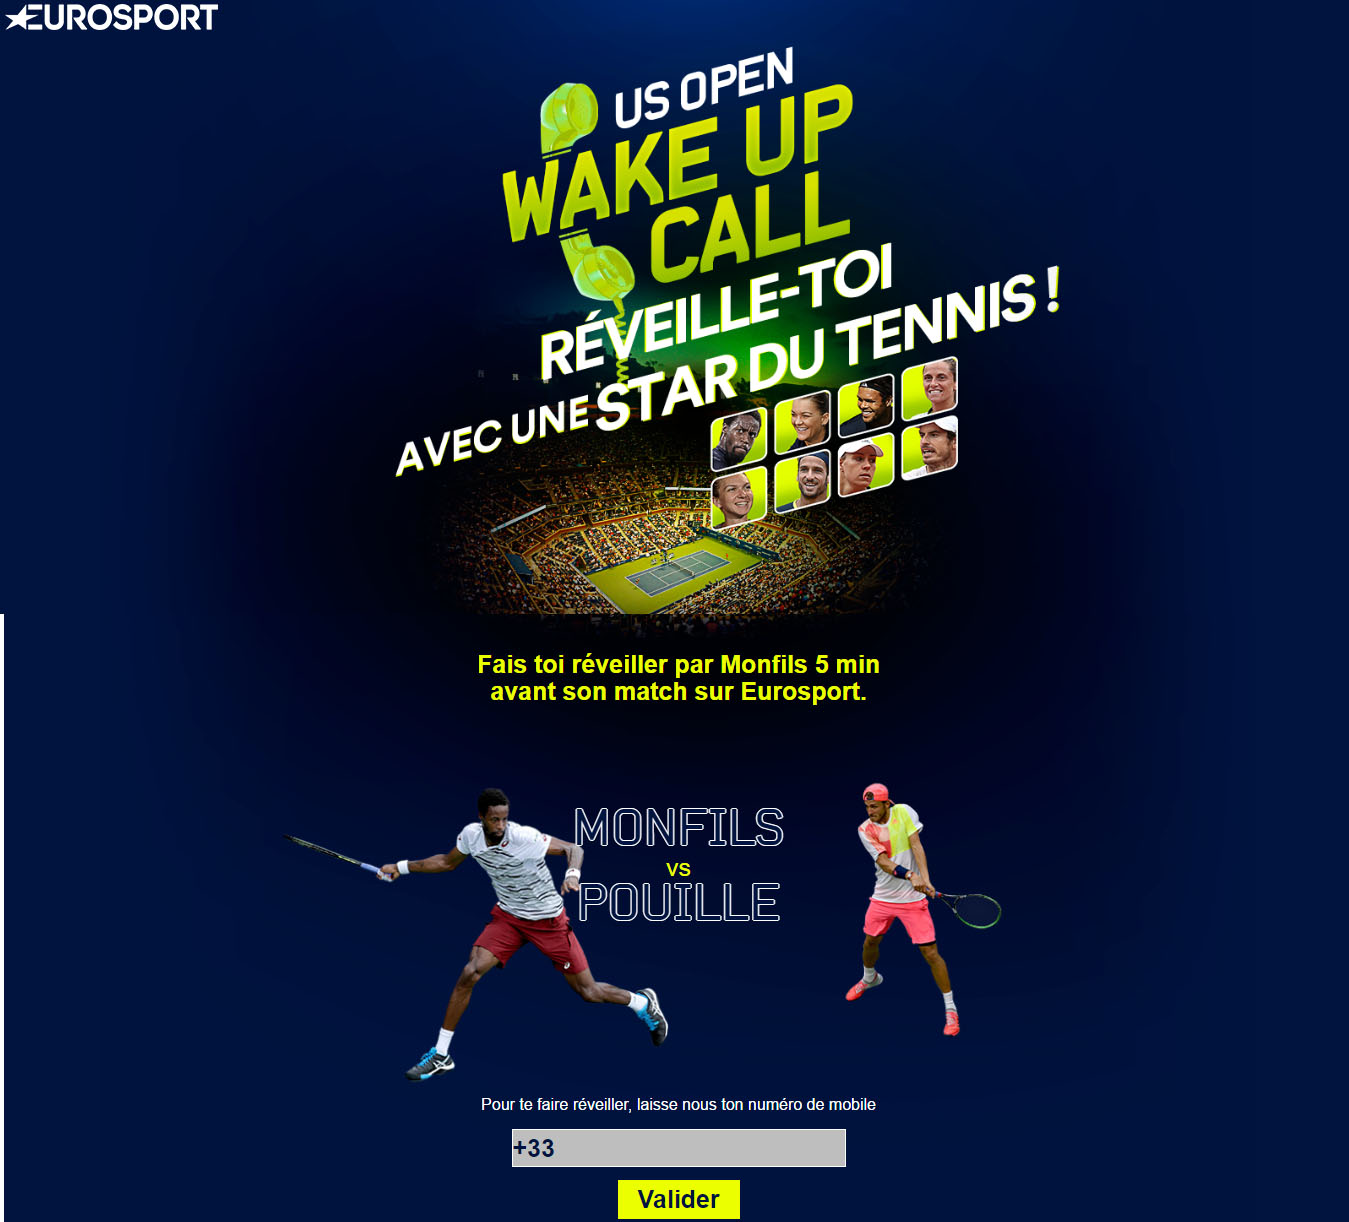 wake up call us open 2016 eurosport tennis